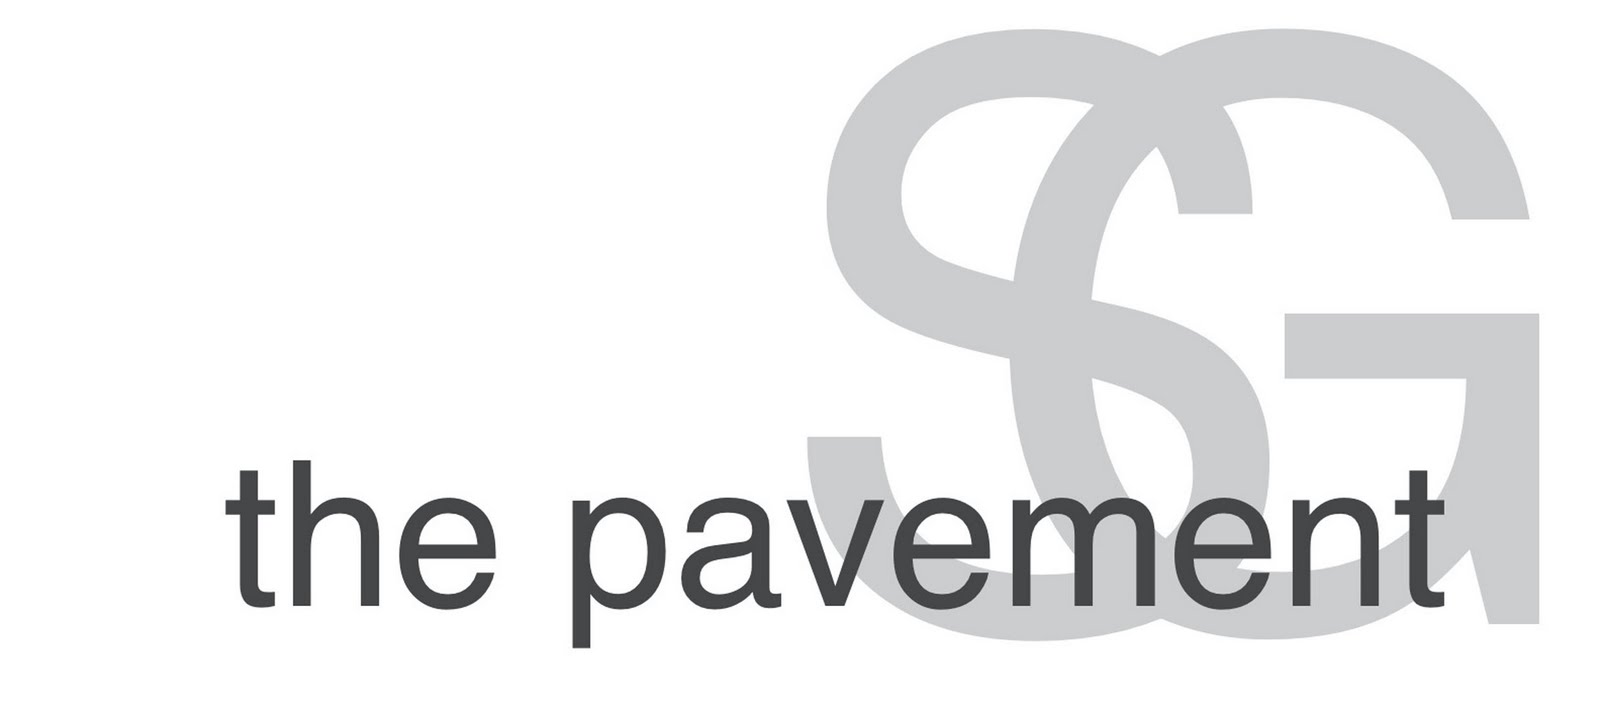 the pavement